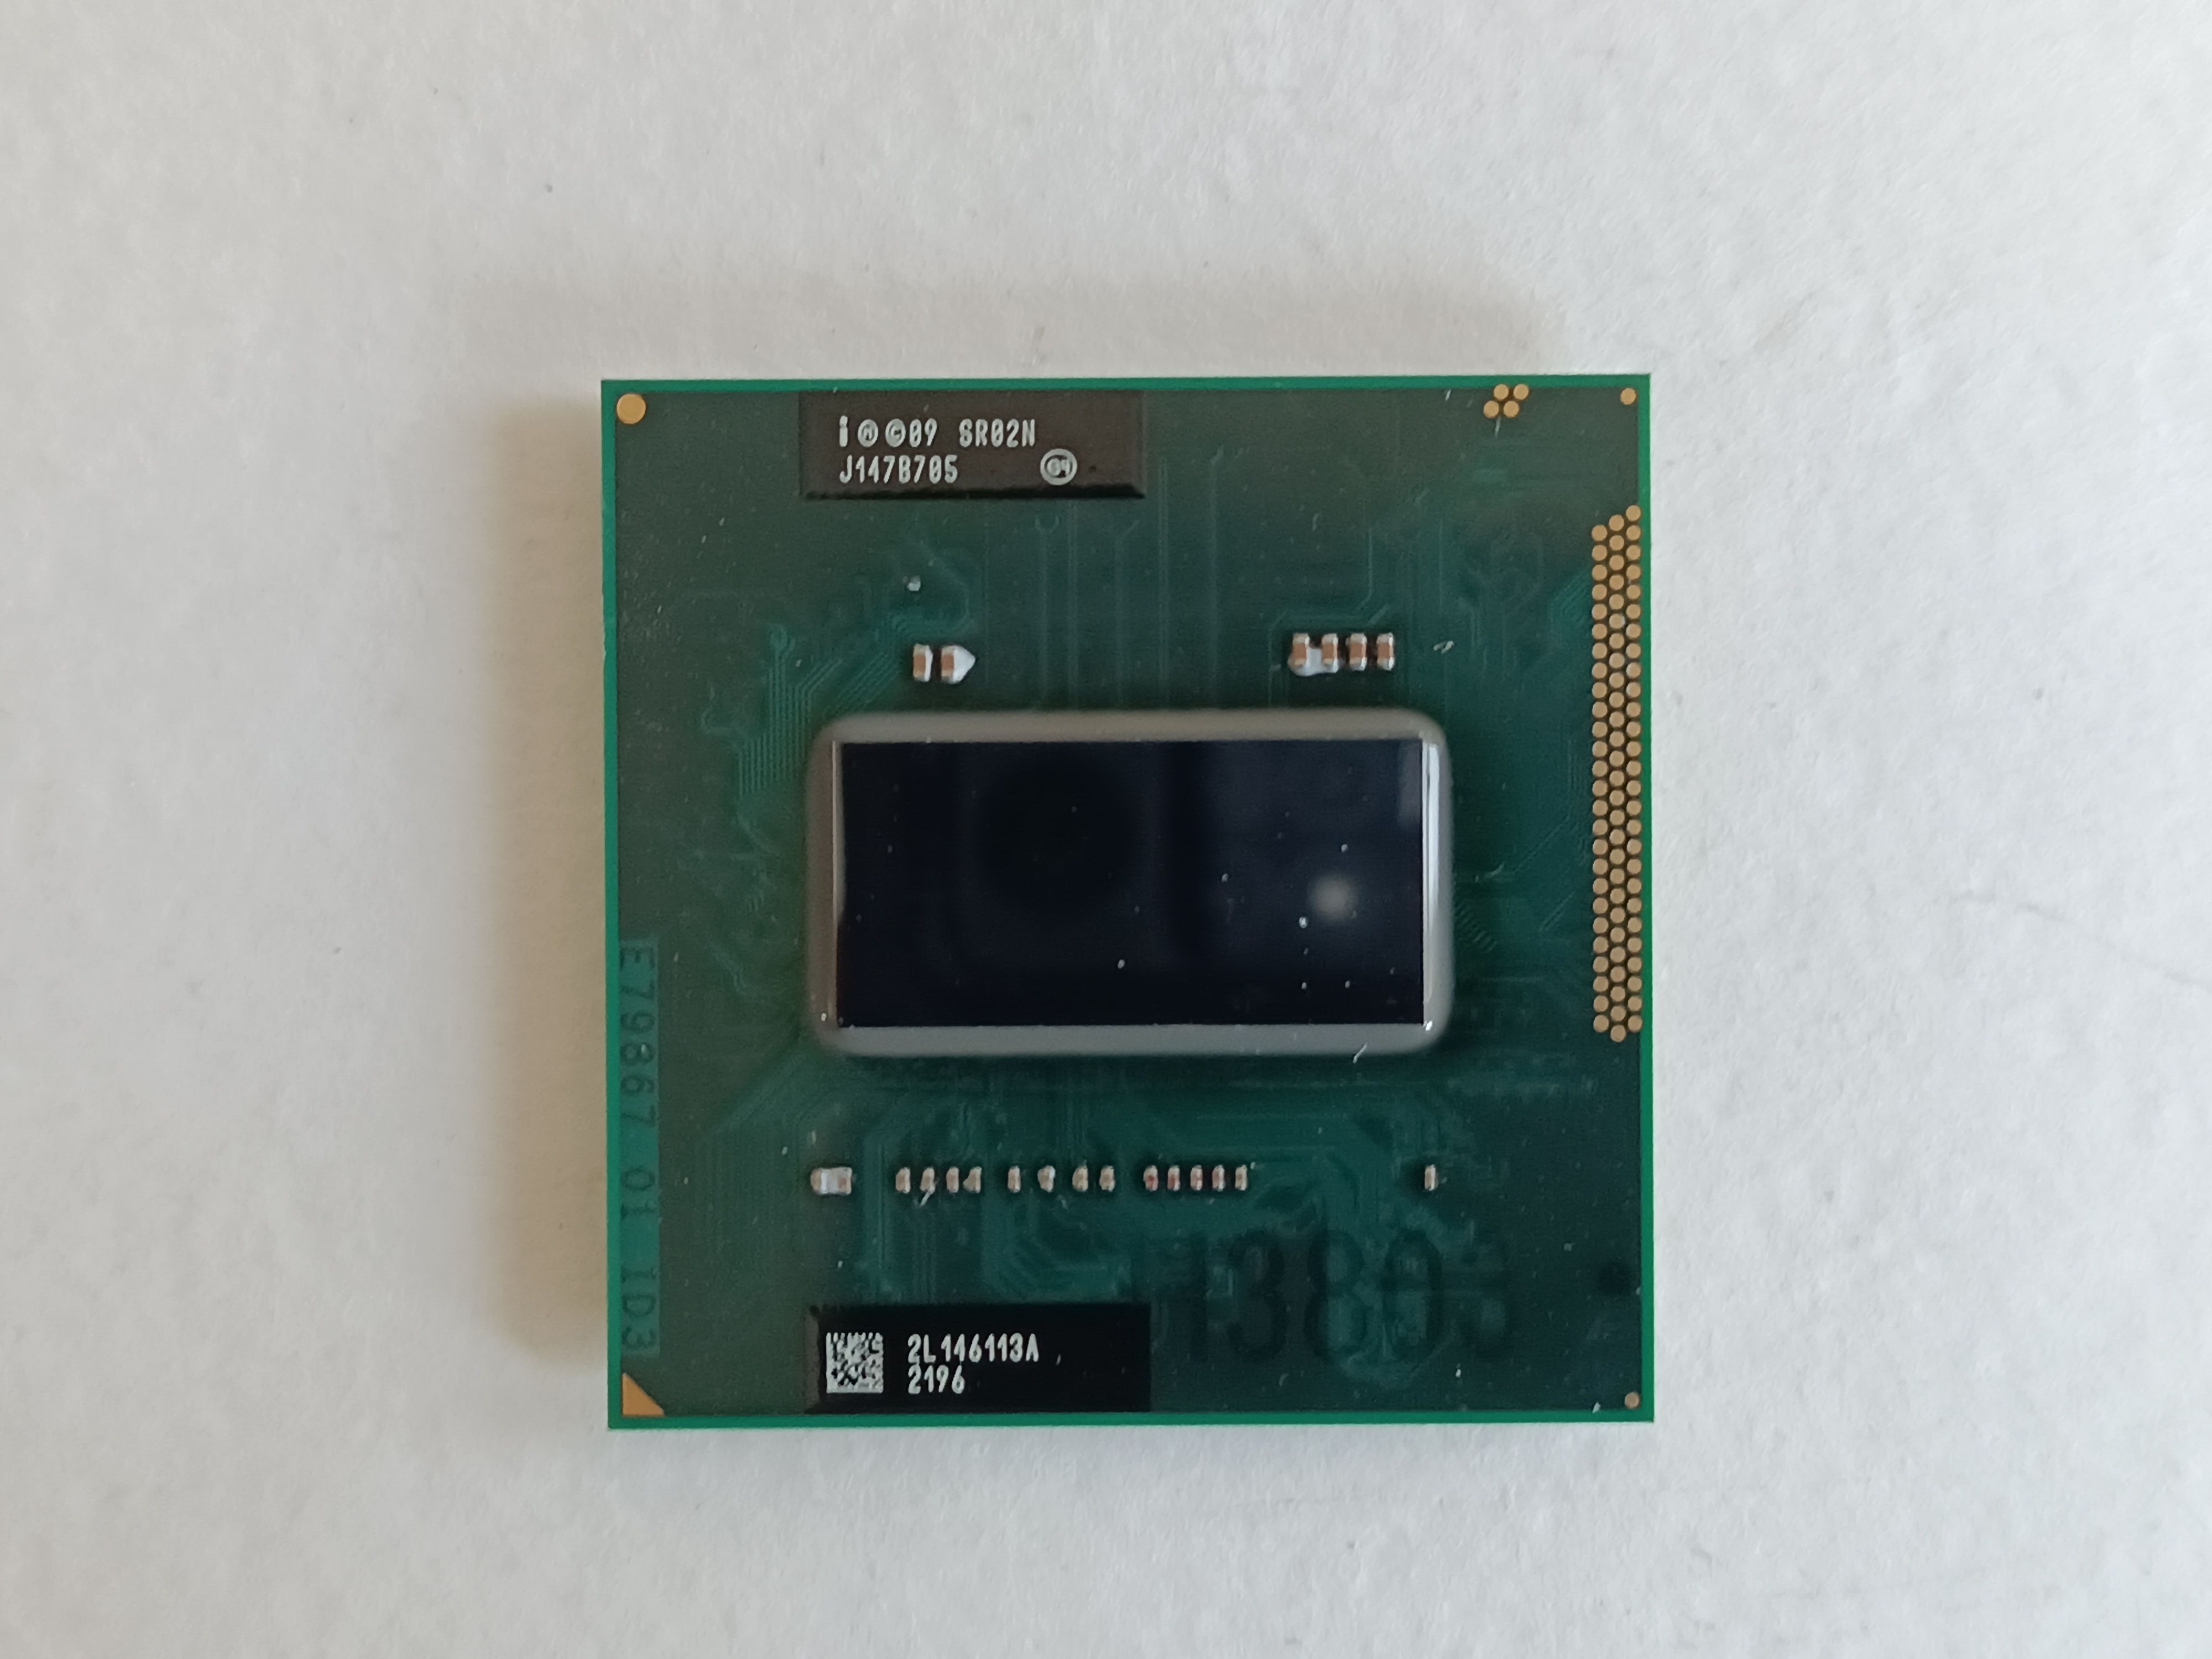 Sr02n Intel Core i7-2670qm. Pga988 процессоры.